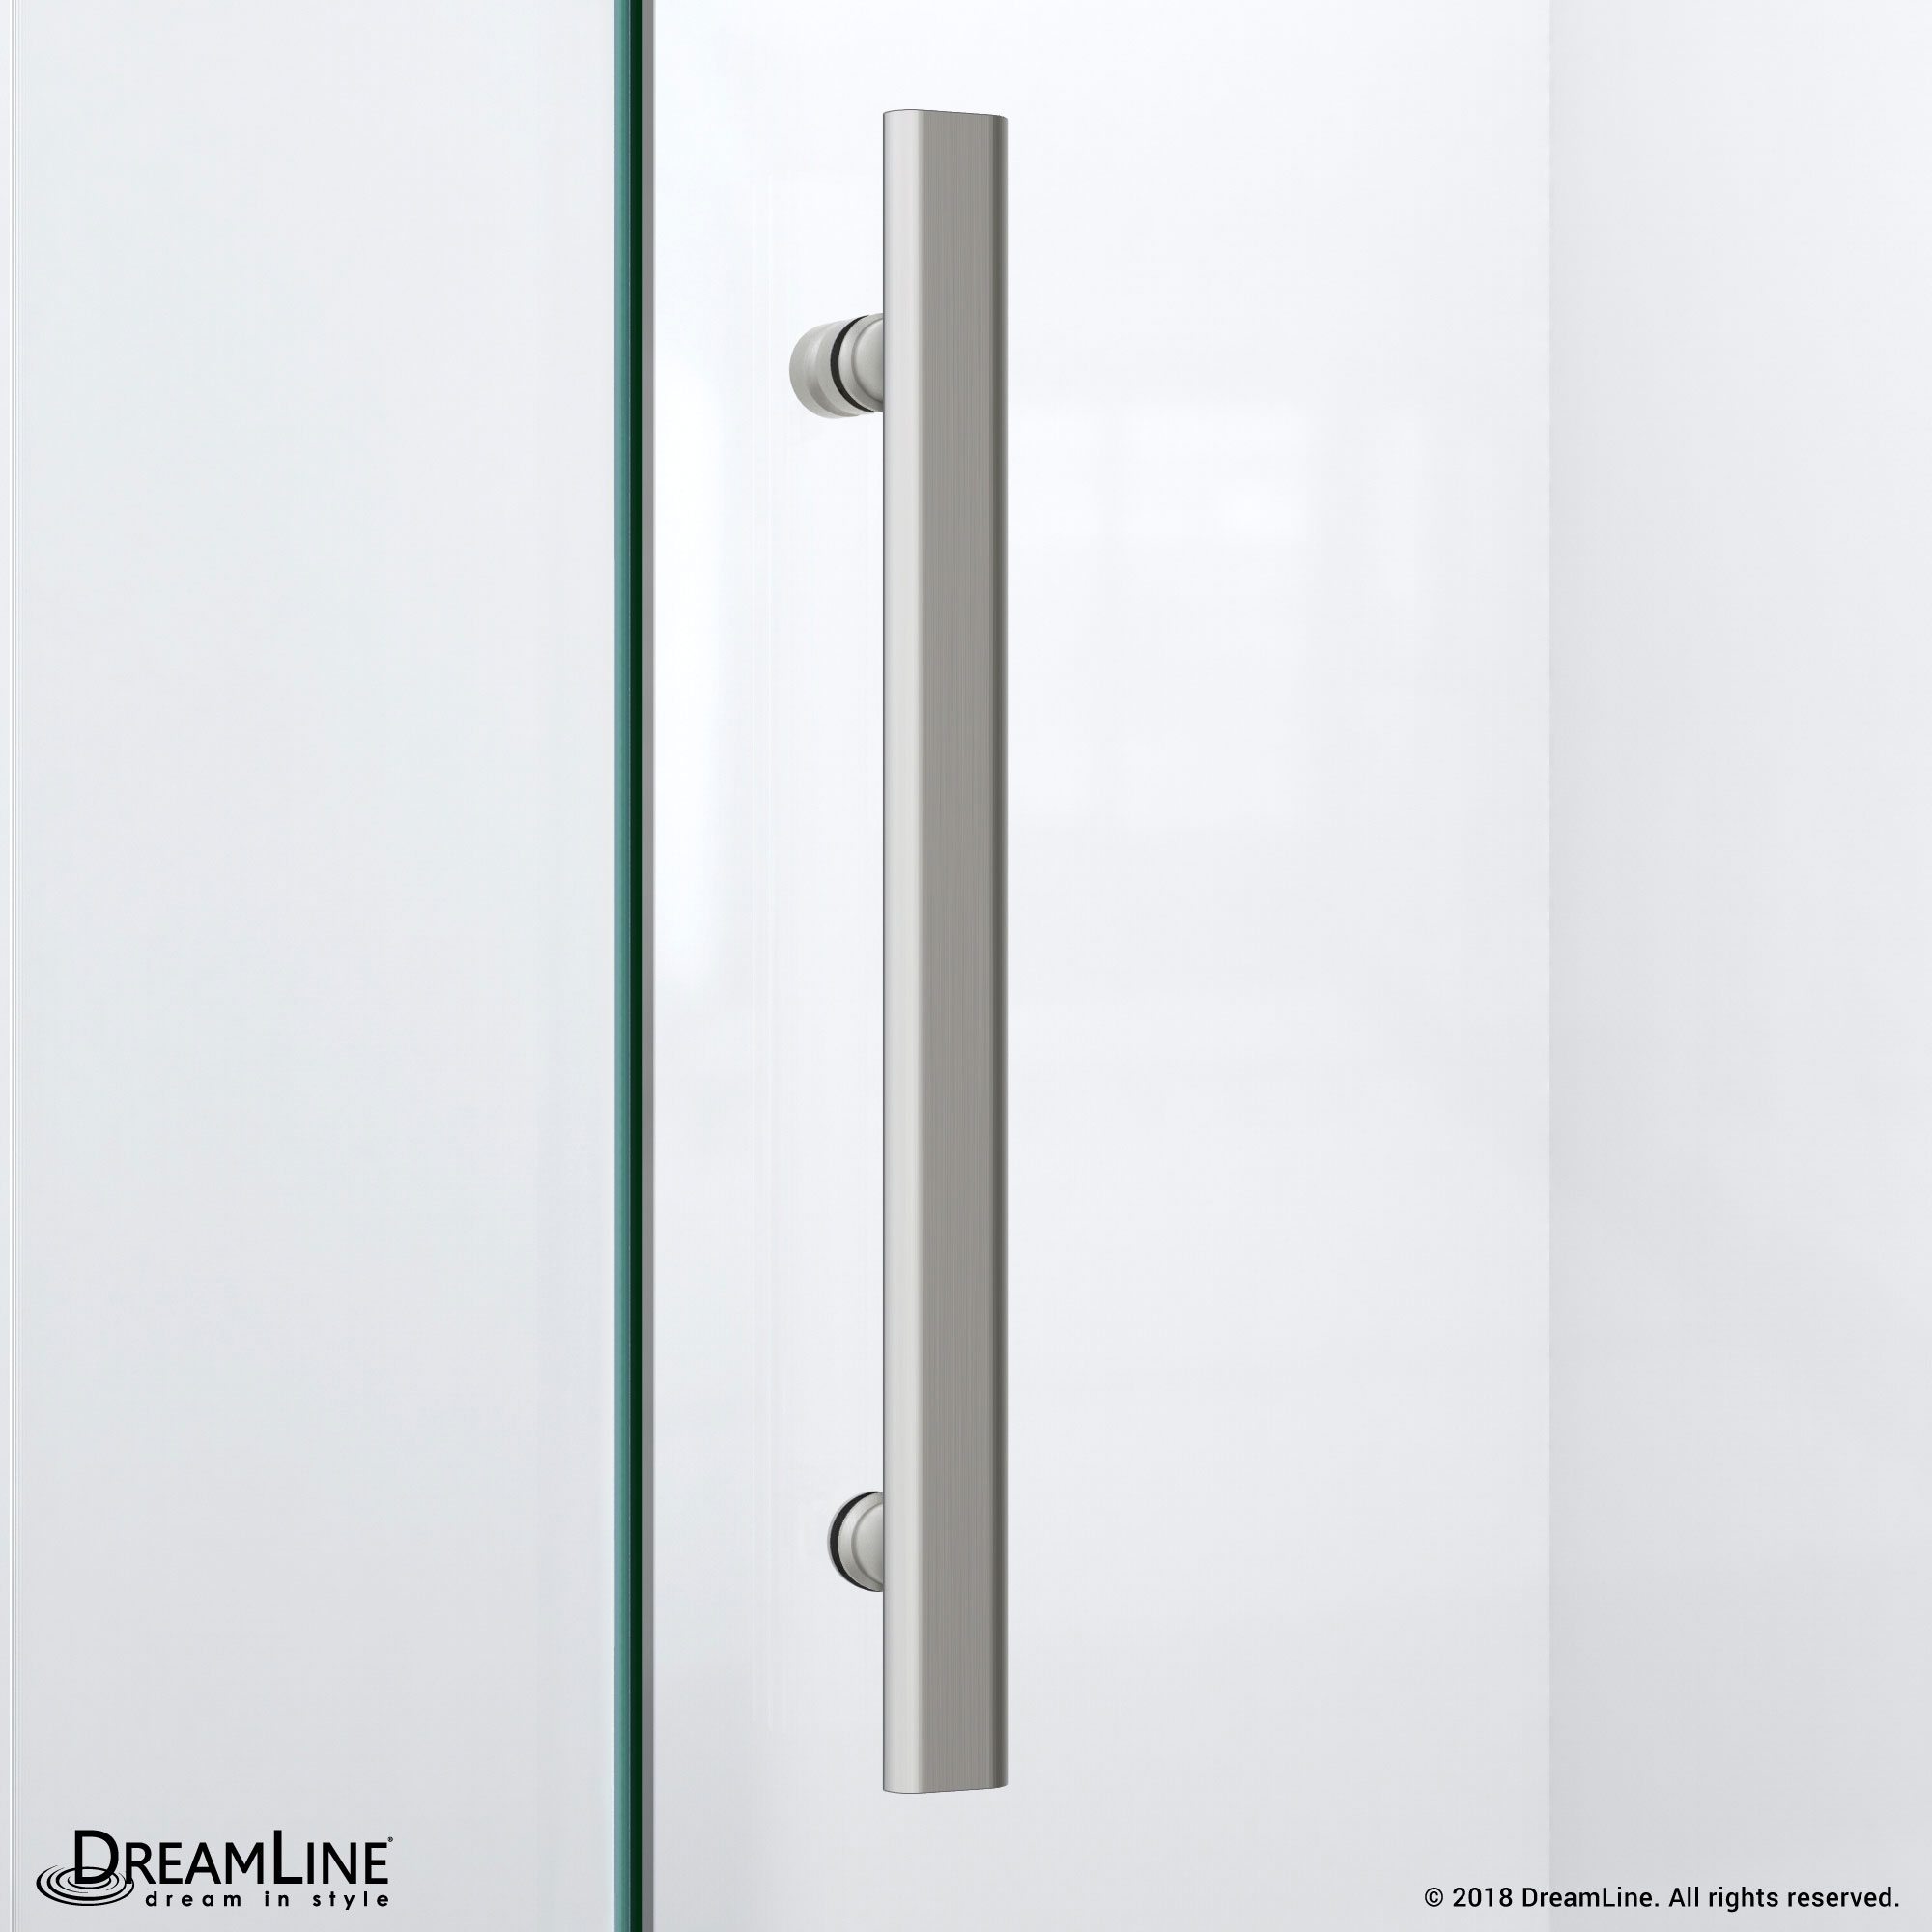 PrismLux 40-3/8" x 40-3/8" Frameless Hinged Shower Enclosure, Clear 3/8" Glass Shower, Brushed Nickel